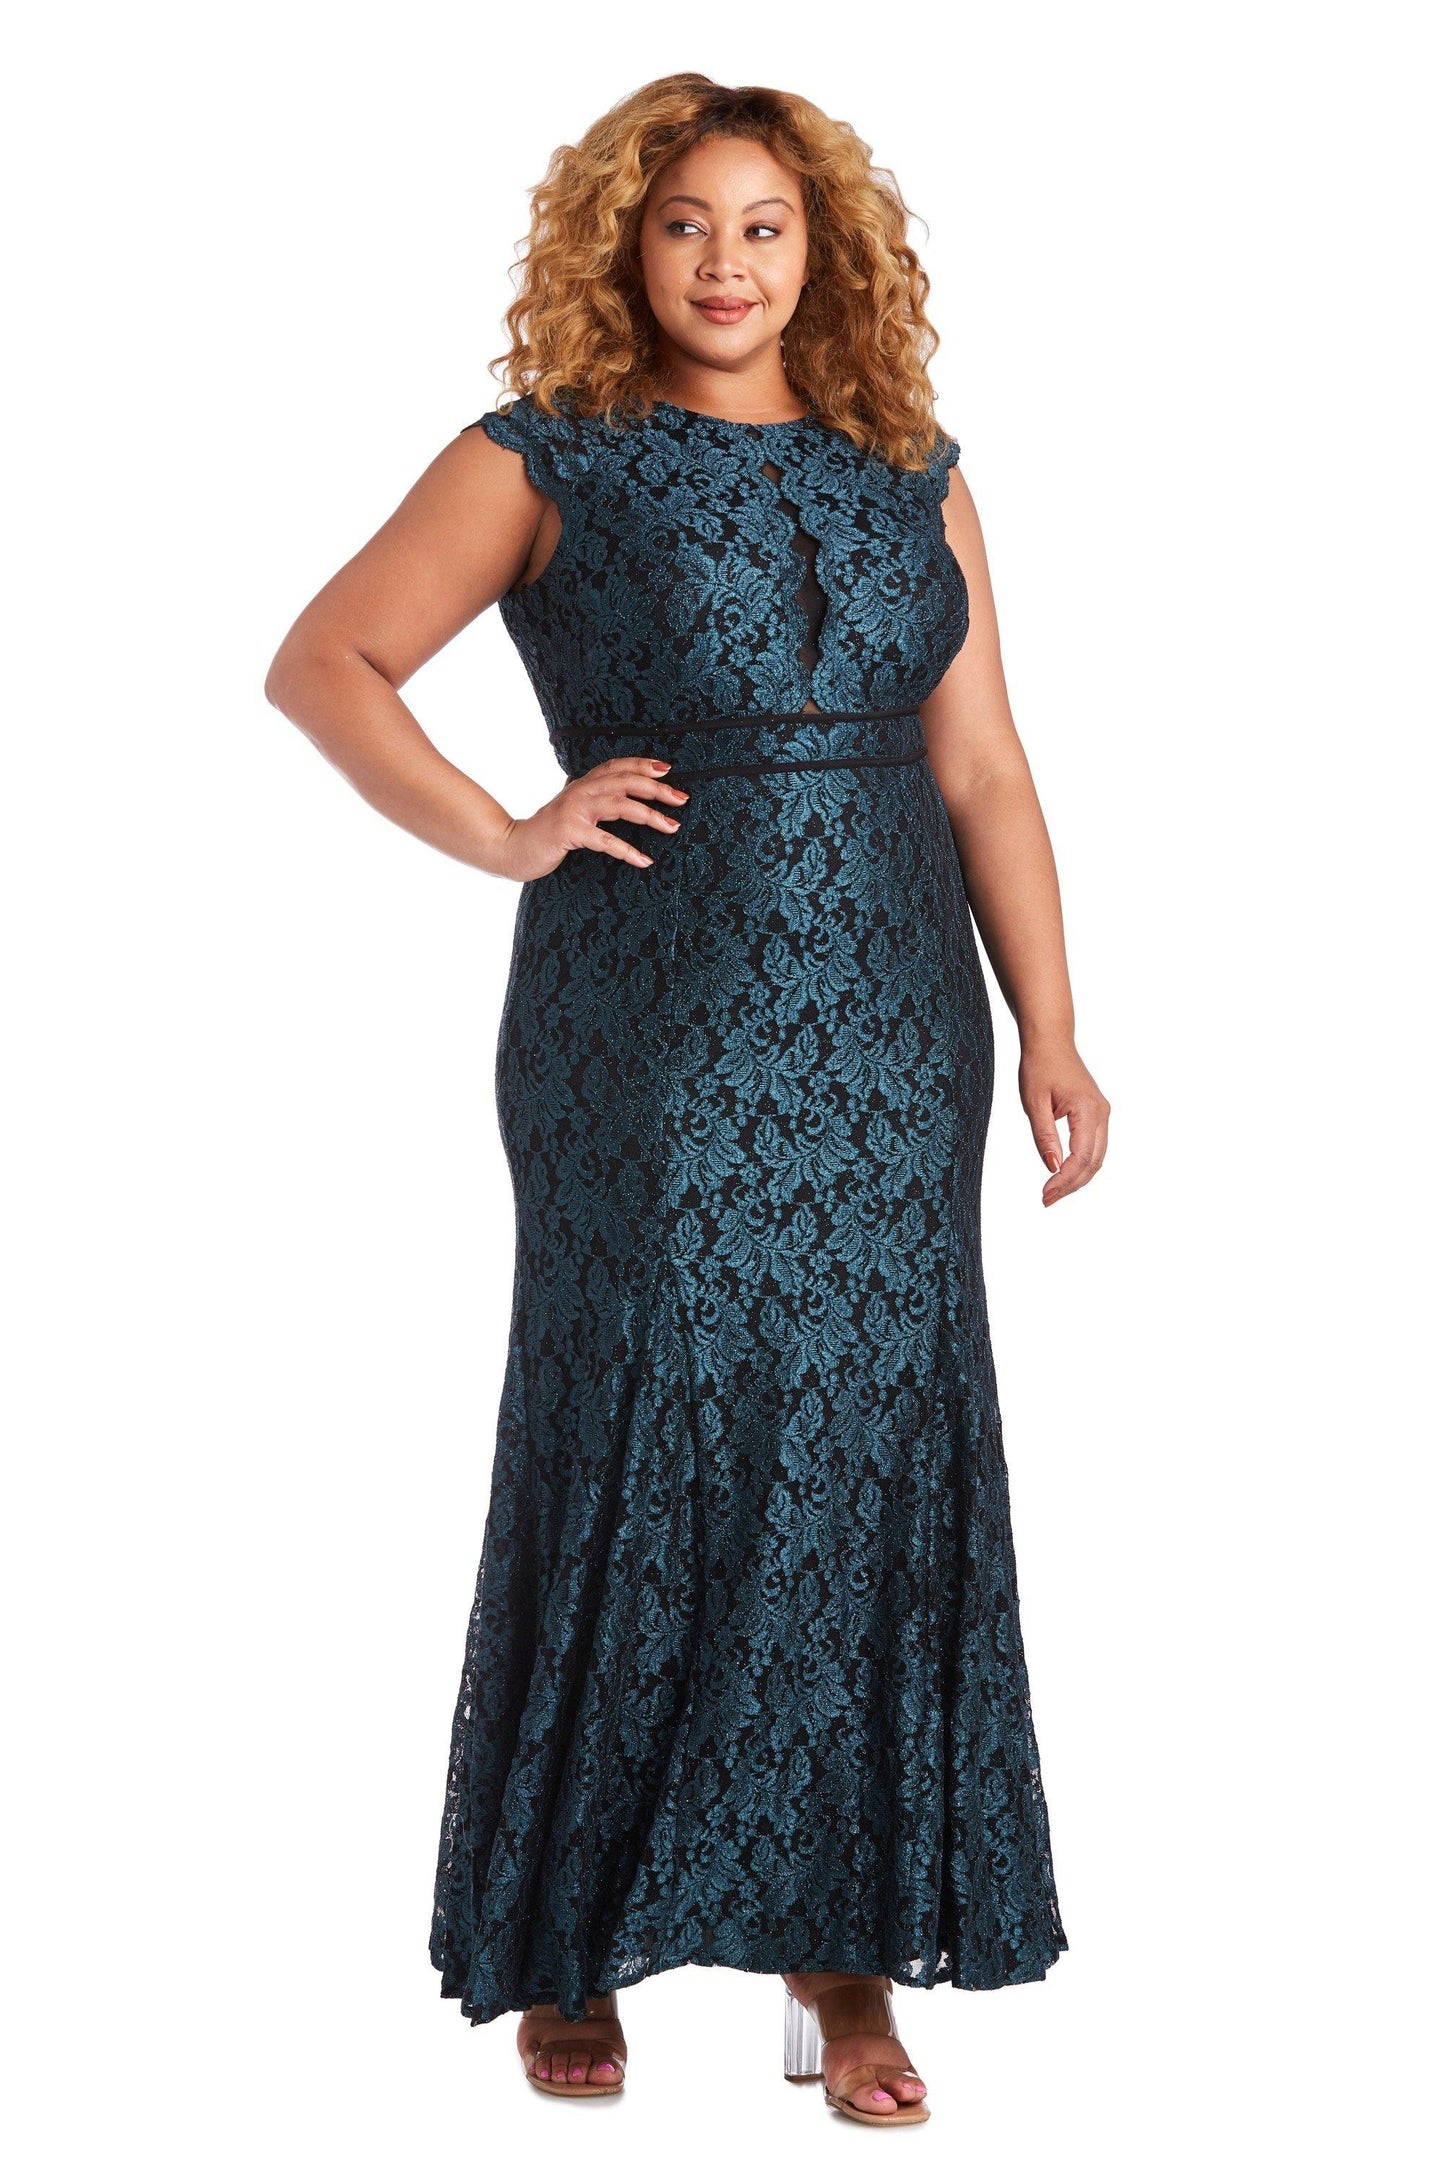 Nightway Plus Size Glitter Lace Long Dress 21699W - The Dress Outlet